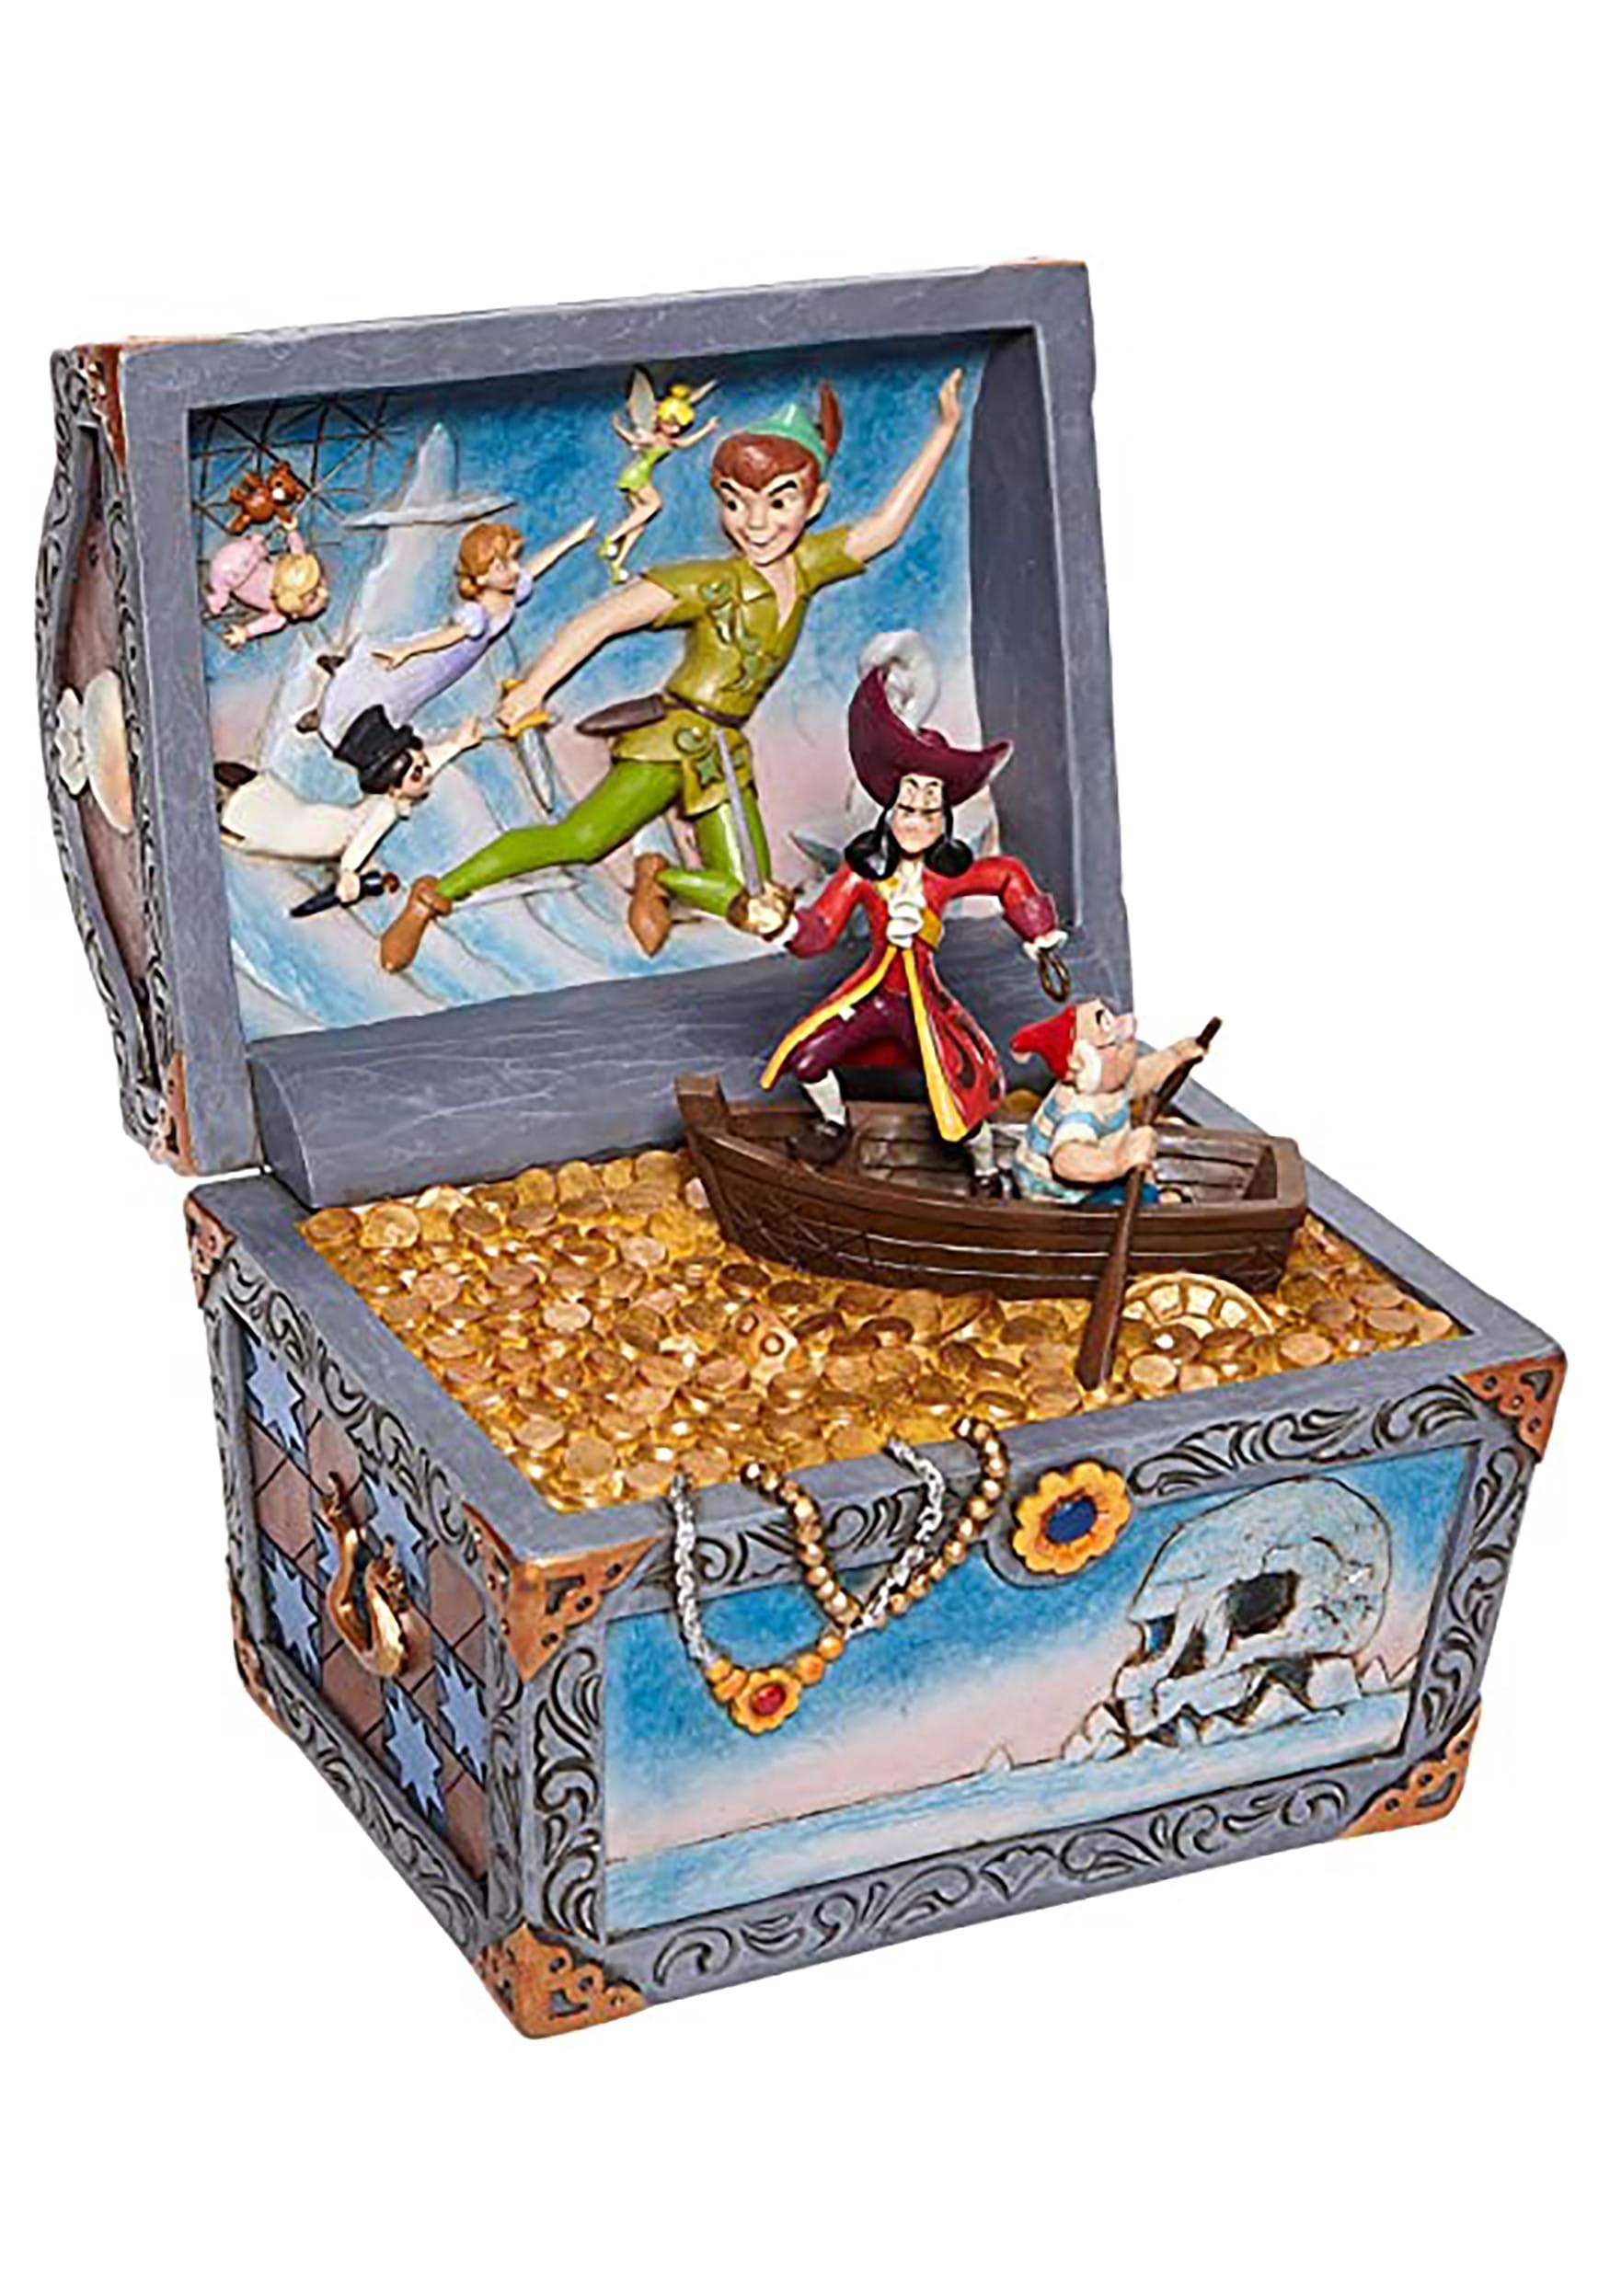 Peter Pan, Wendy & Tinker Bell – Jim Shore